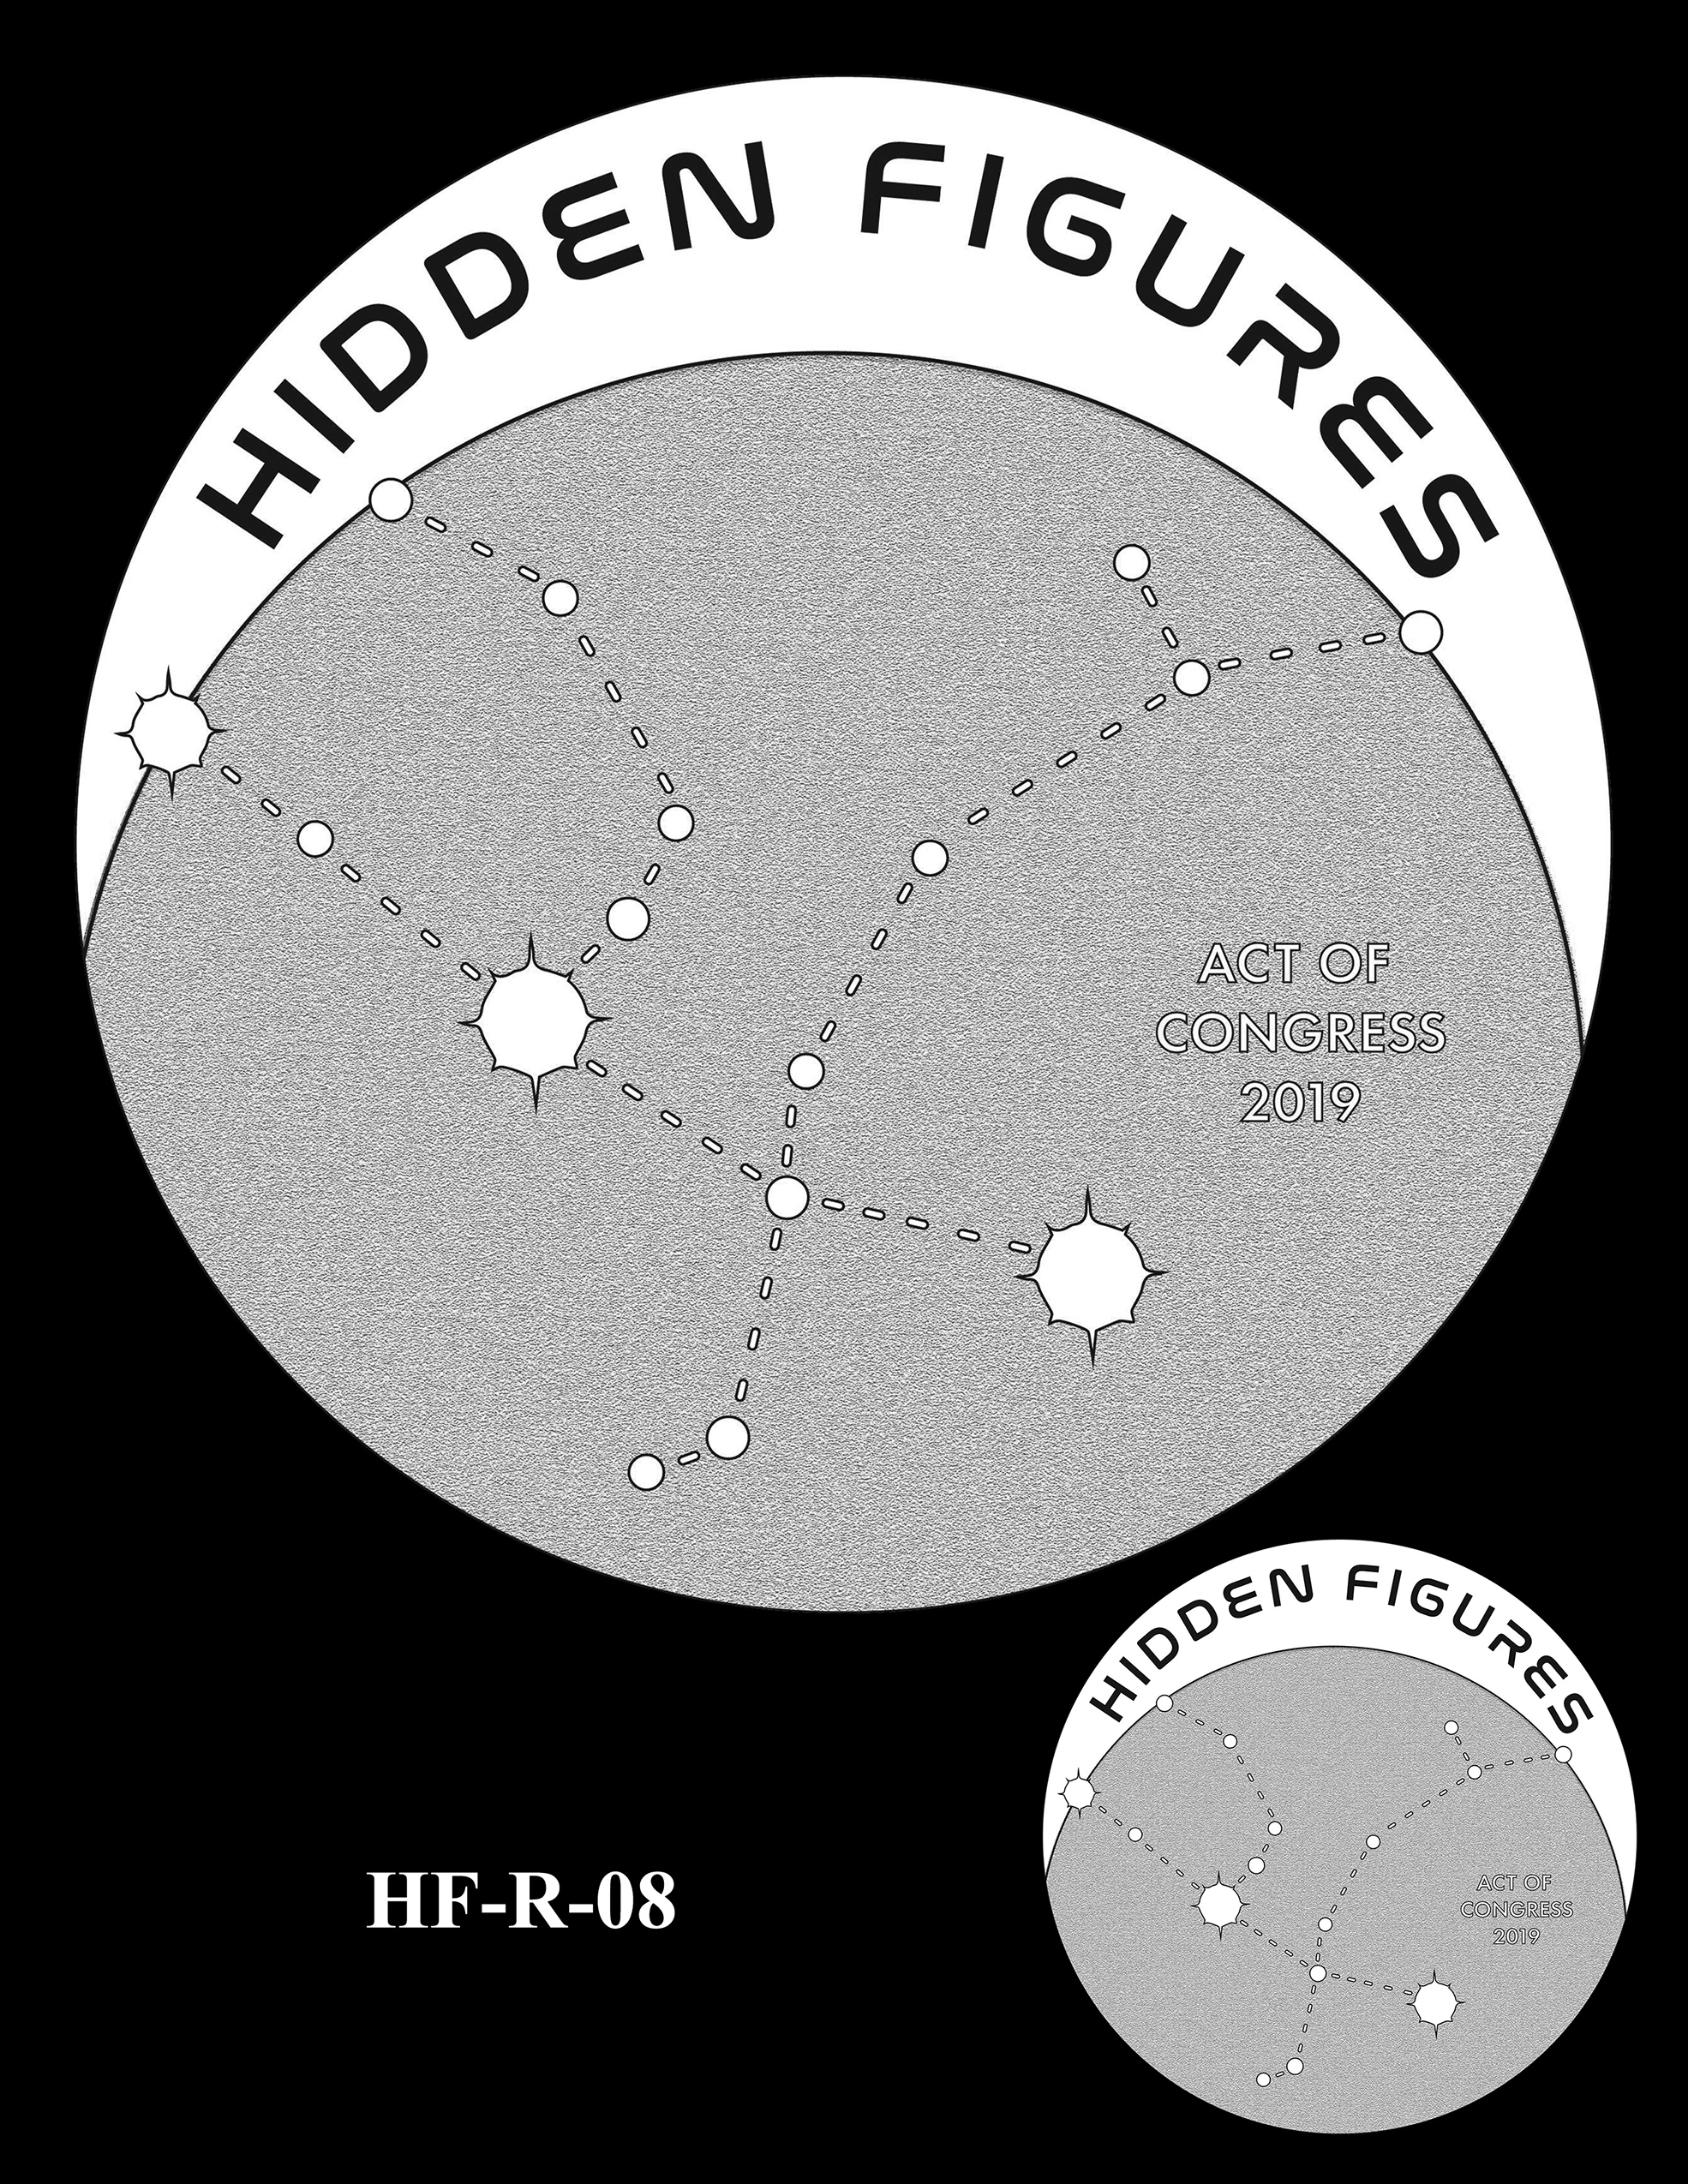 HF-R-08 -- Hidden Figures Group Congressional Gold Medal